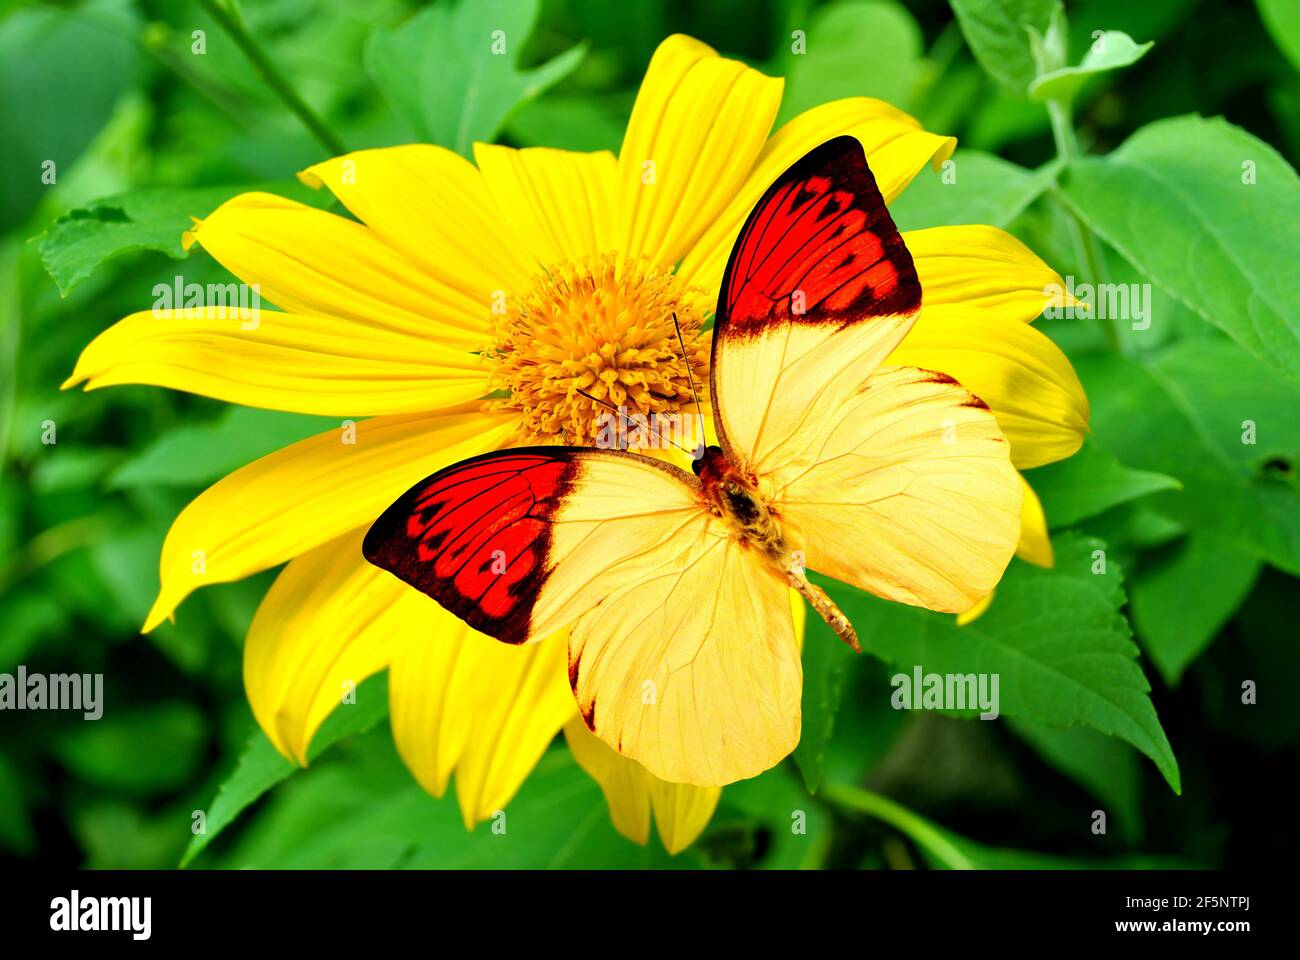 Great Orange Tip Butterfly Latin name Hebomoia glaucippe on a Schweinitz's sunflower Latin name Helianthus schweinitzii Stock Photo